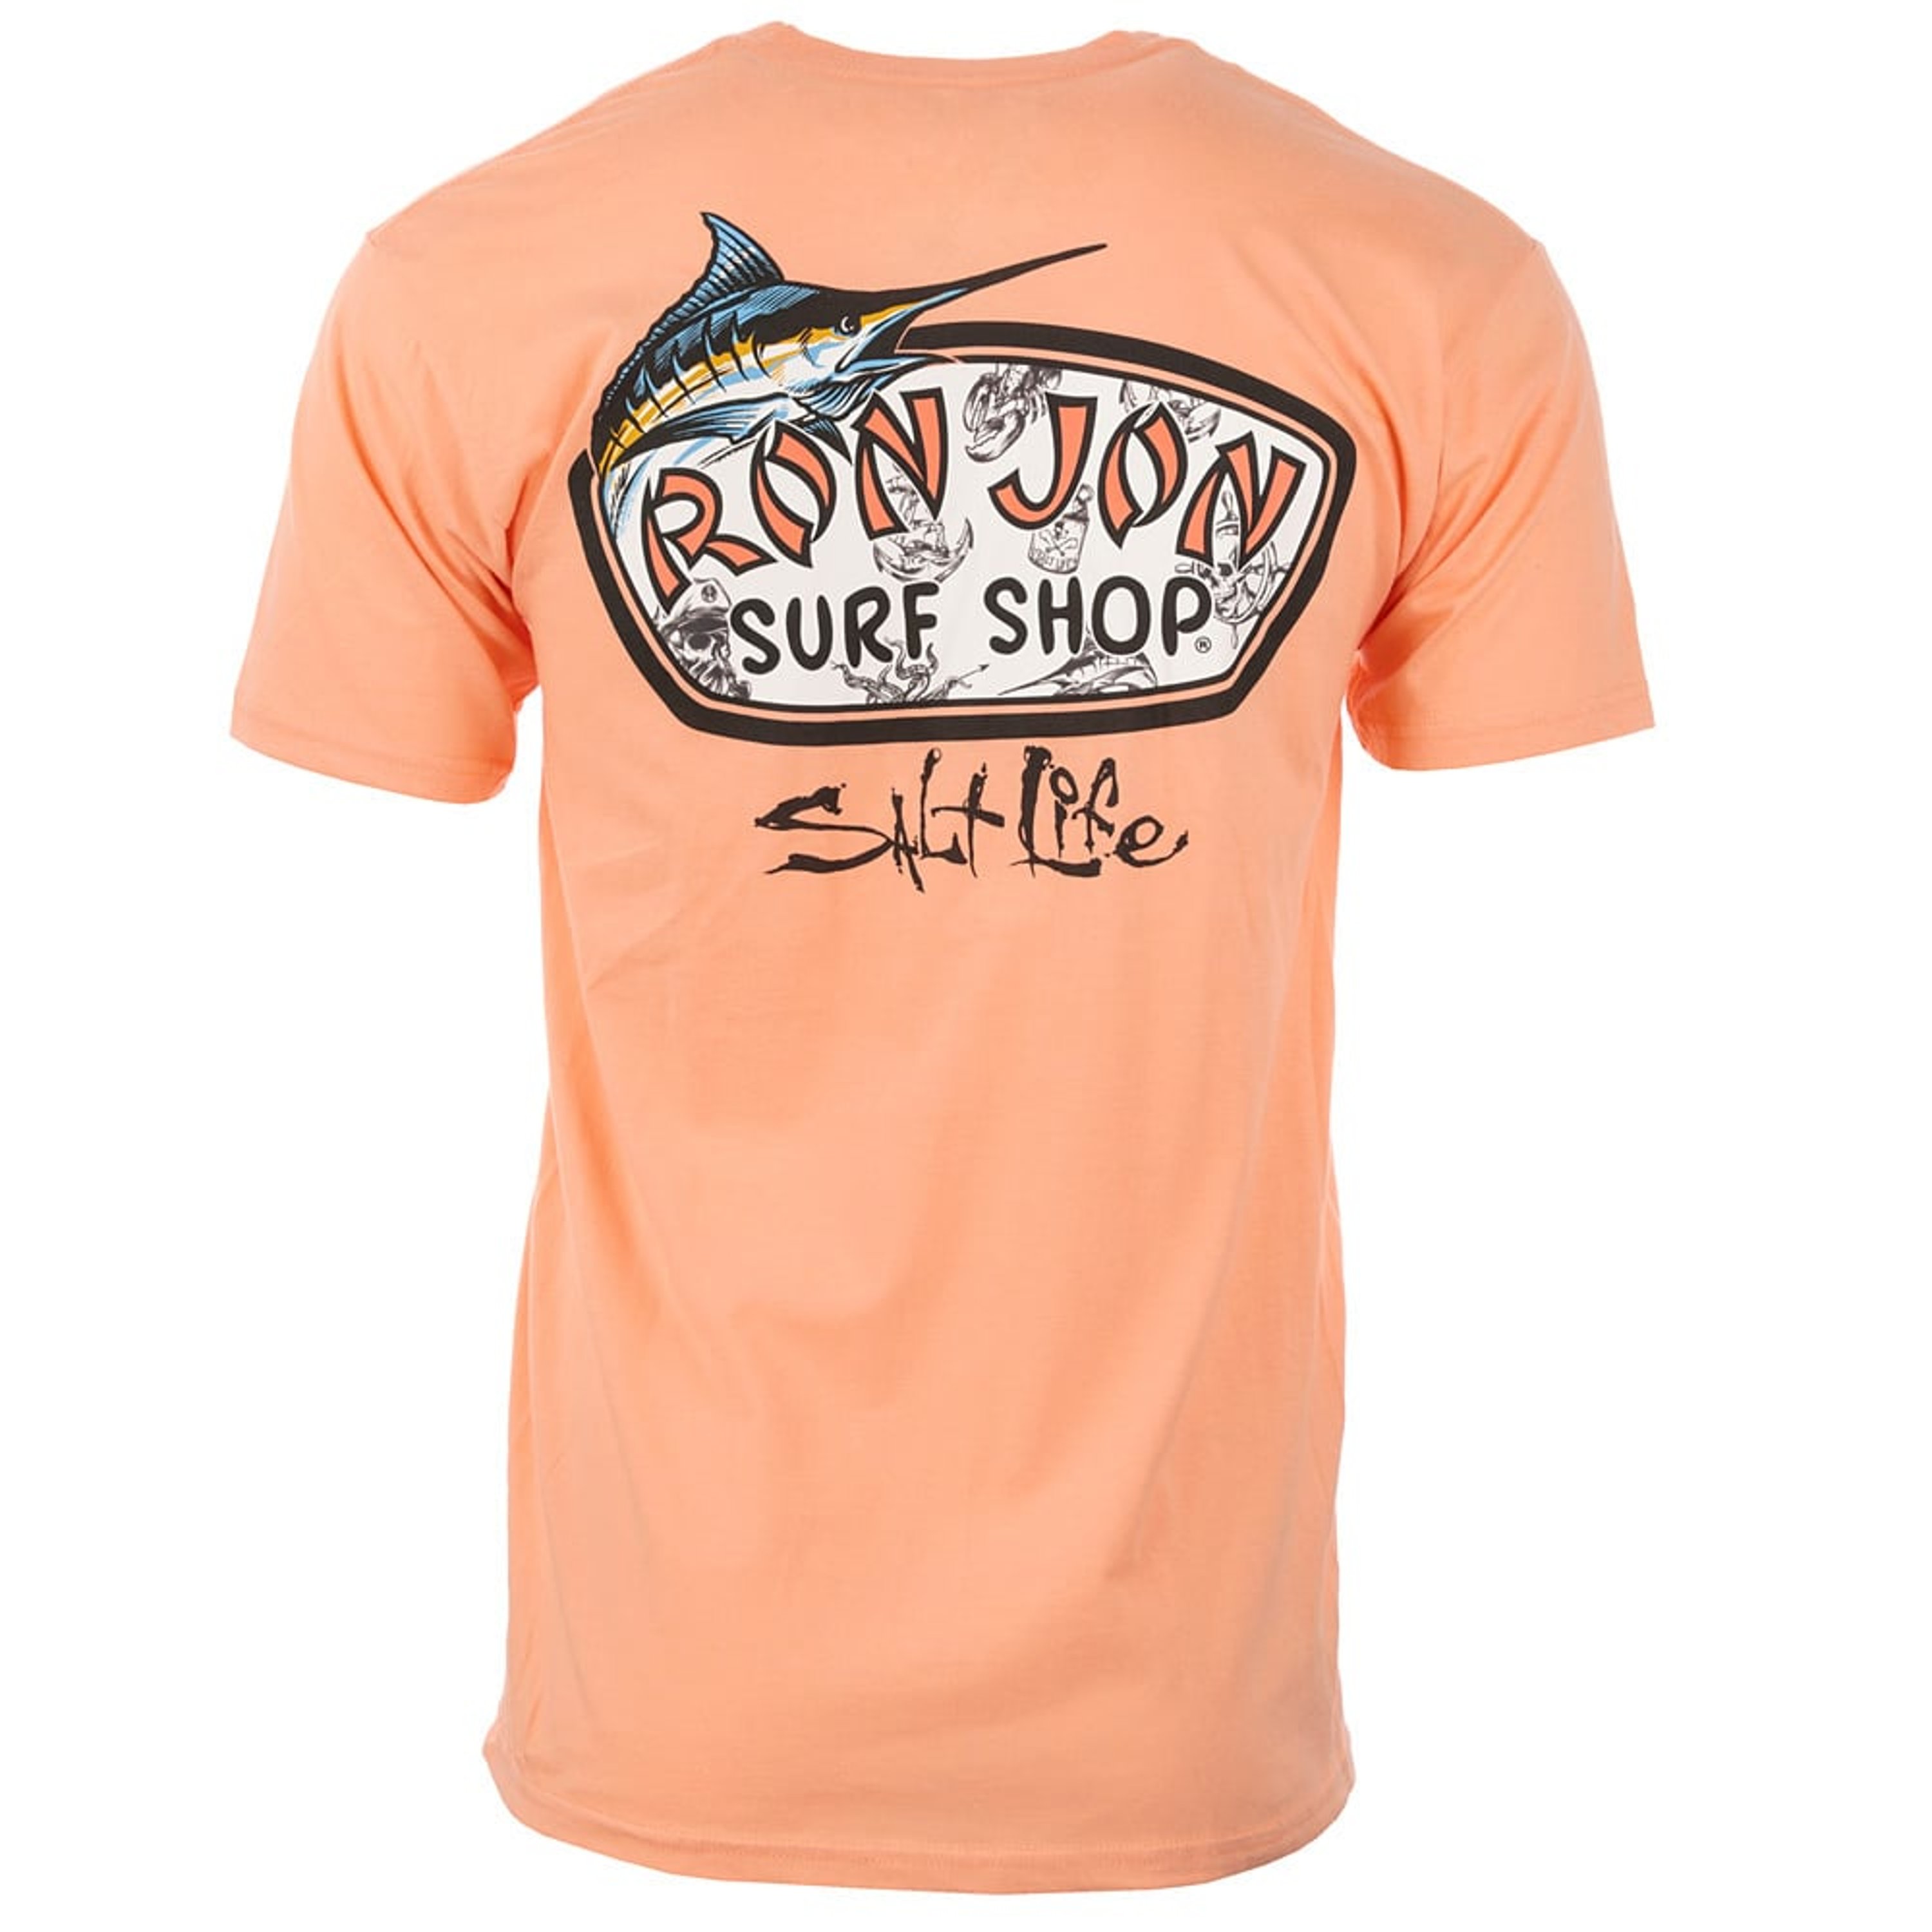 4REEL Charcoal/Orange T-Shirt – 4REEL Fishing